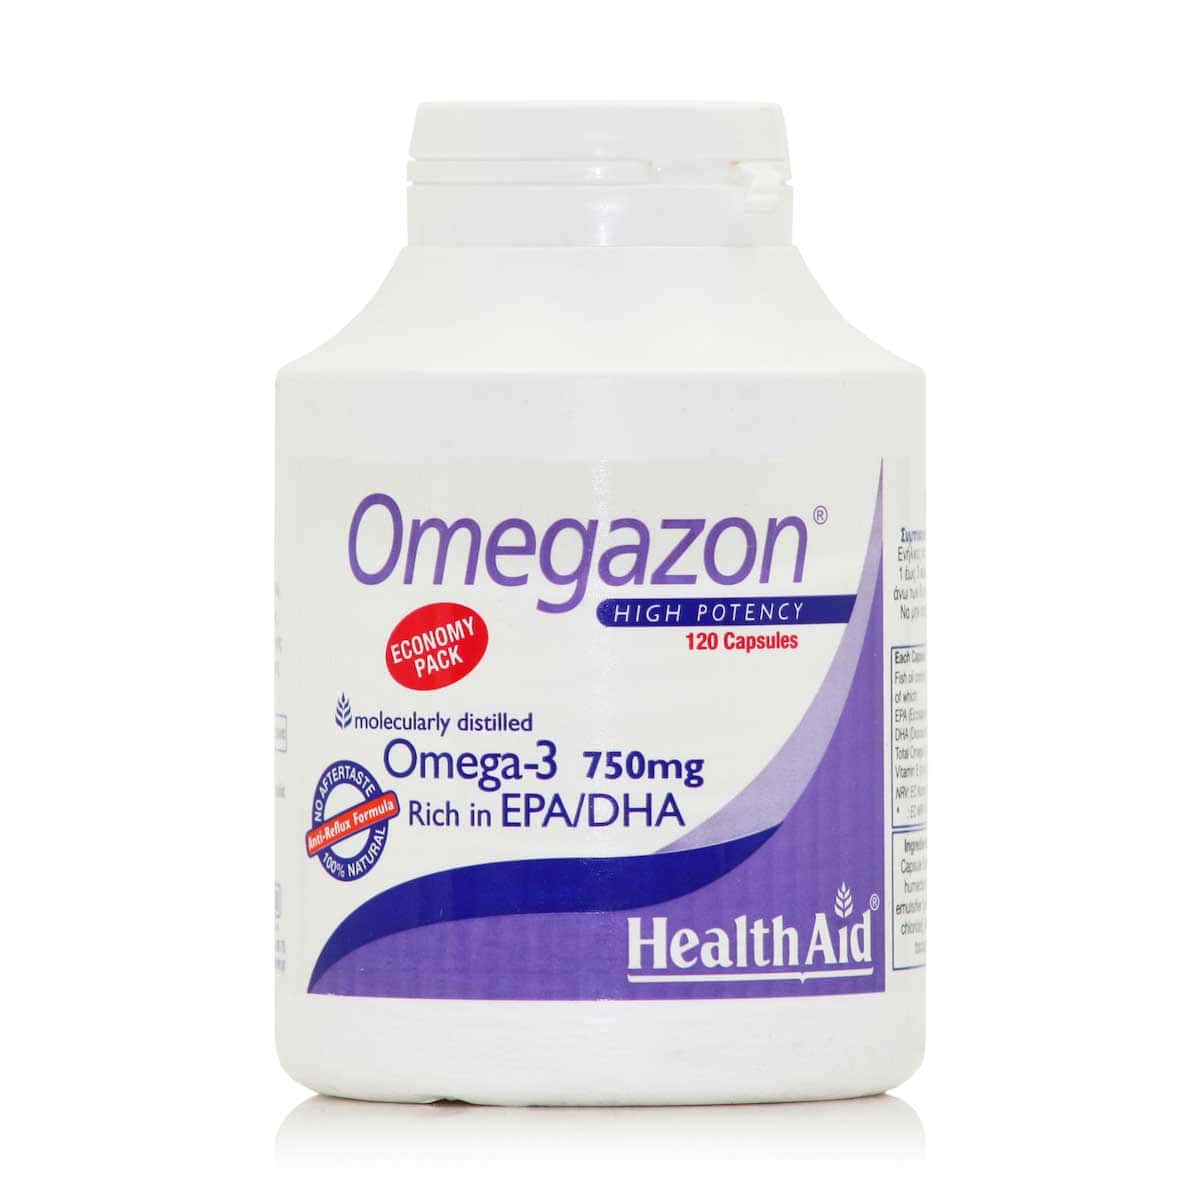 Health-Aid-Omegazon-Omega-3-Ixthyelaio-750mg-120-kapsoules-5019781012442